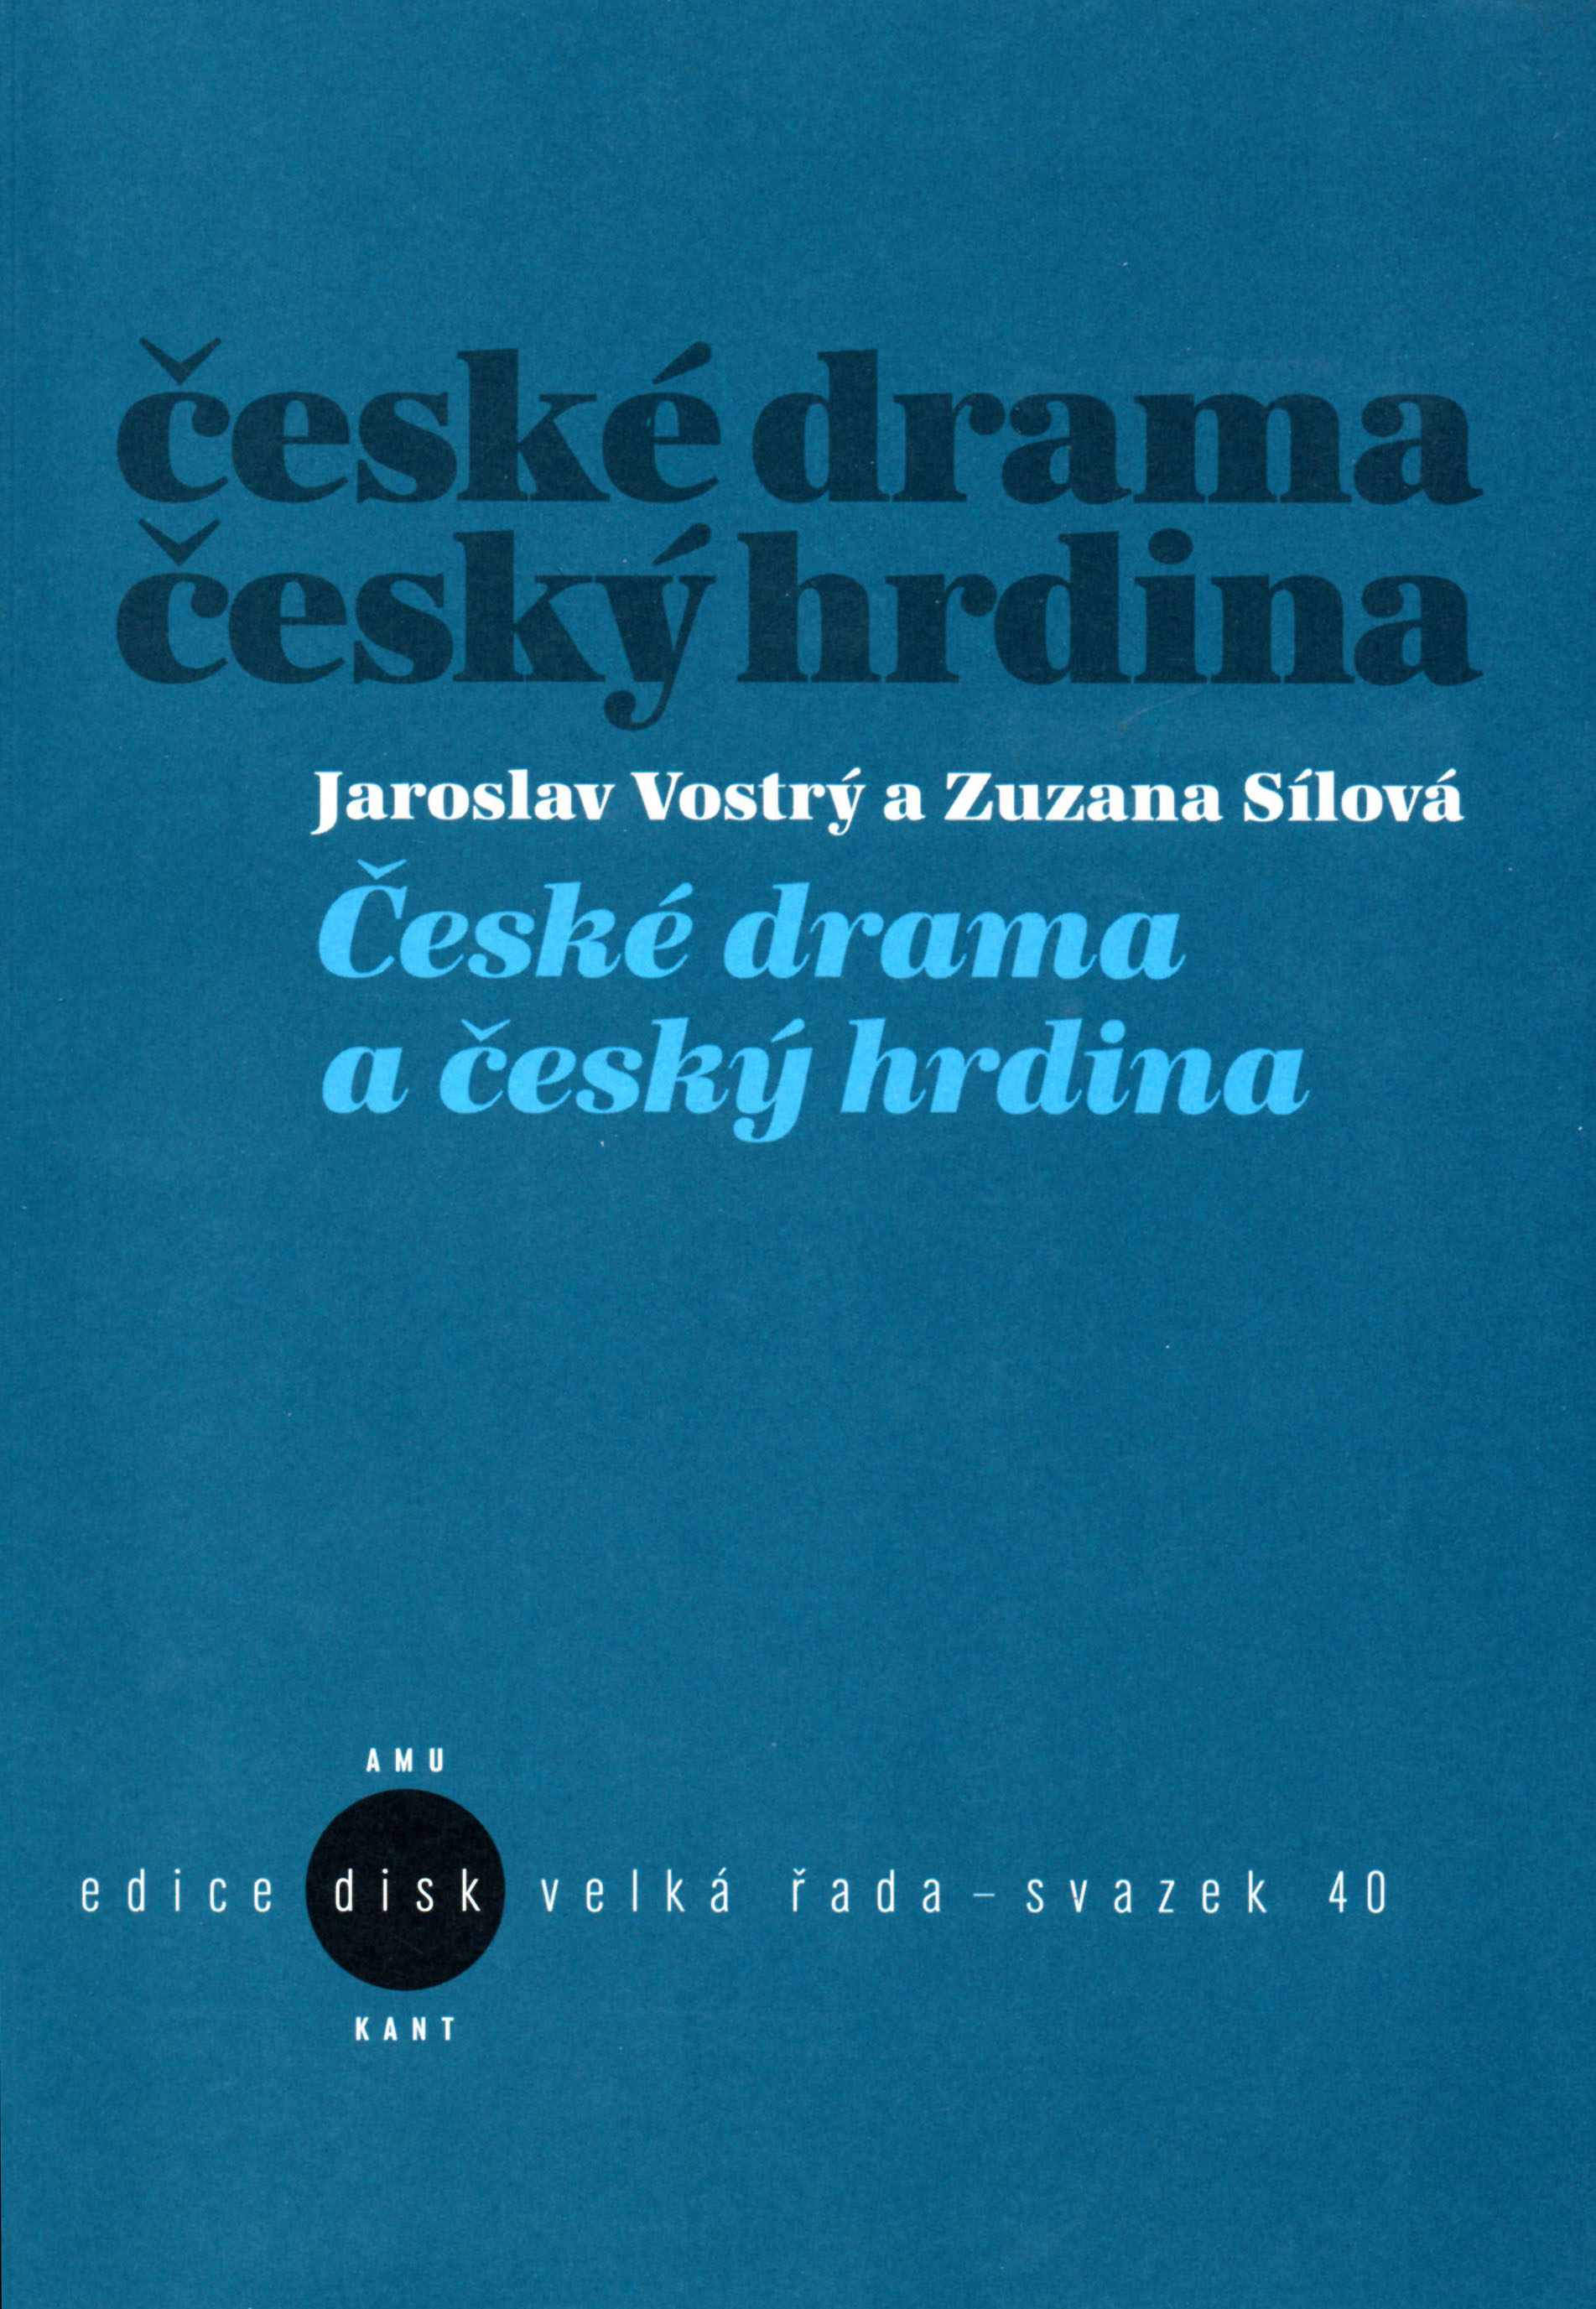 ceske drama cover